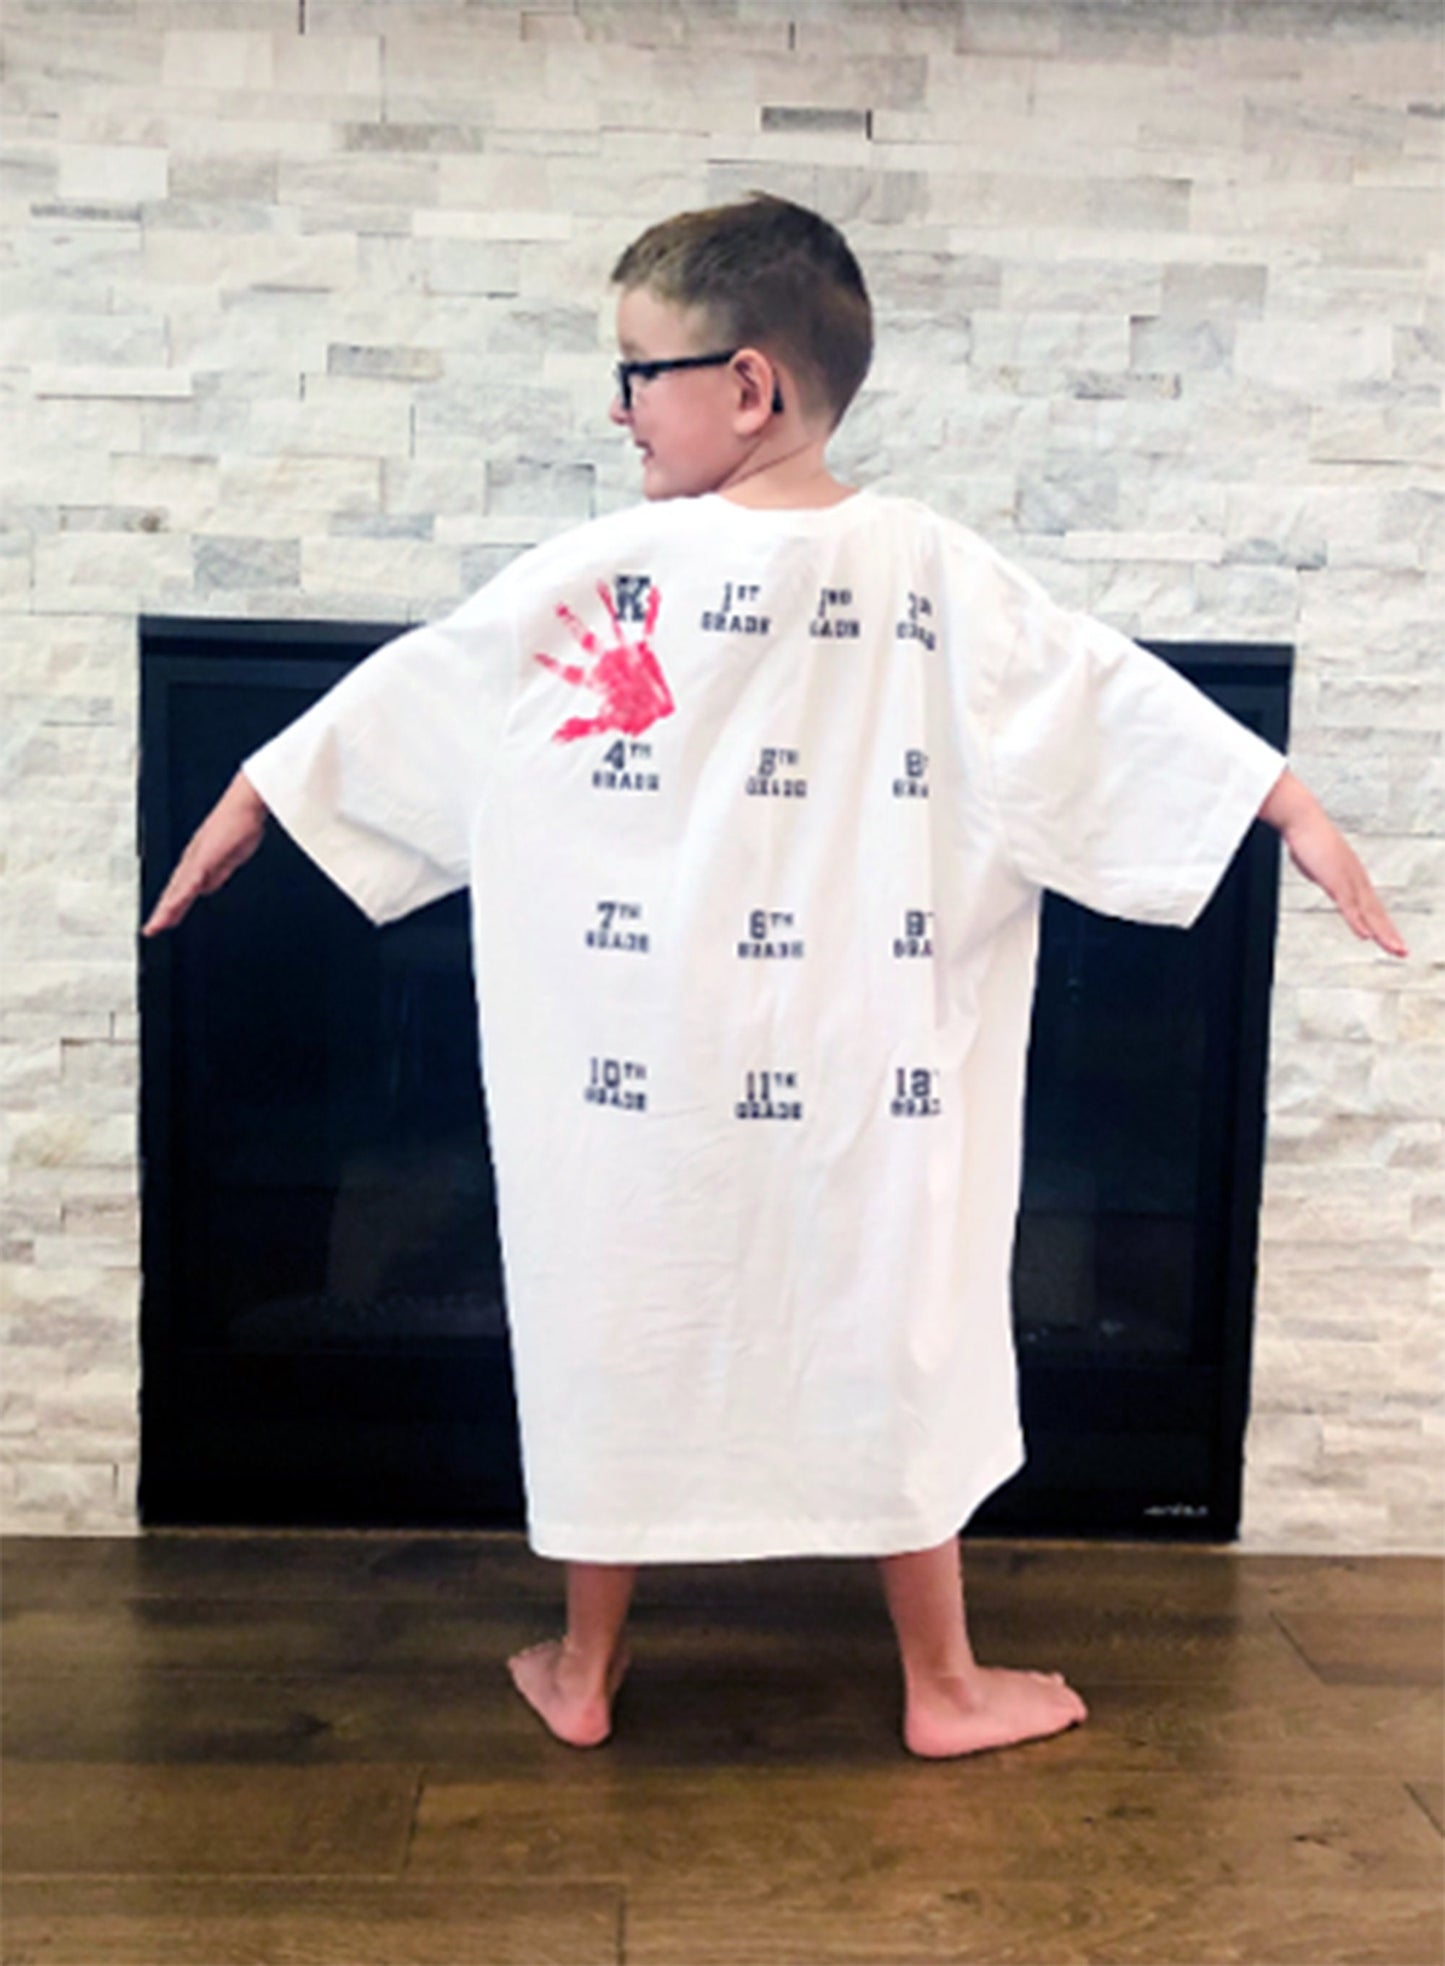 Personalized "Class of" Shirt - First Day of School Kindergarten Shirt - Stick'em Up Baby®